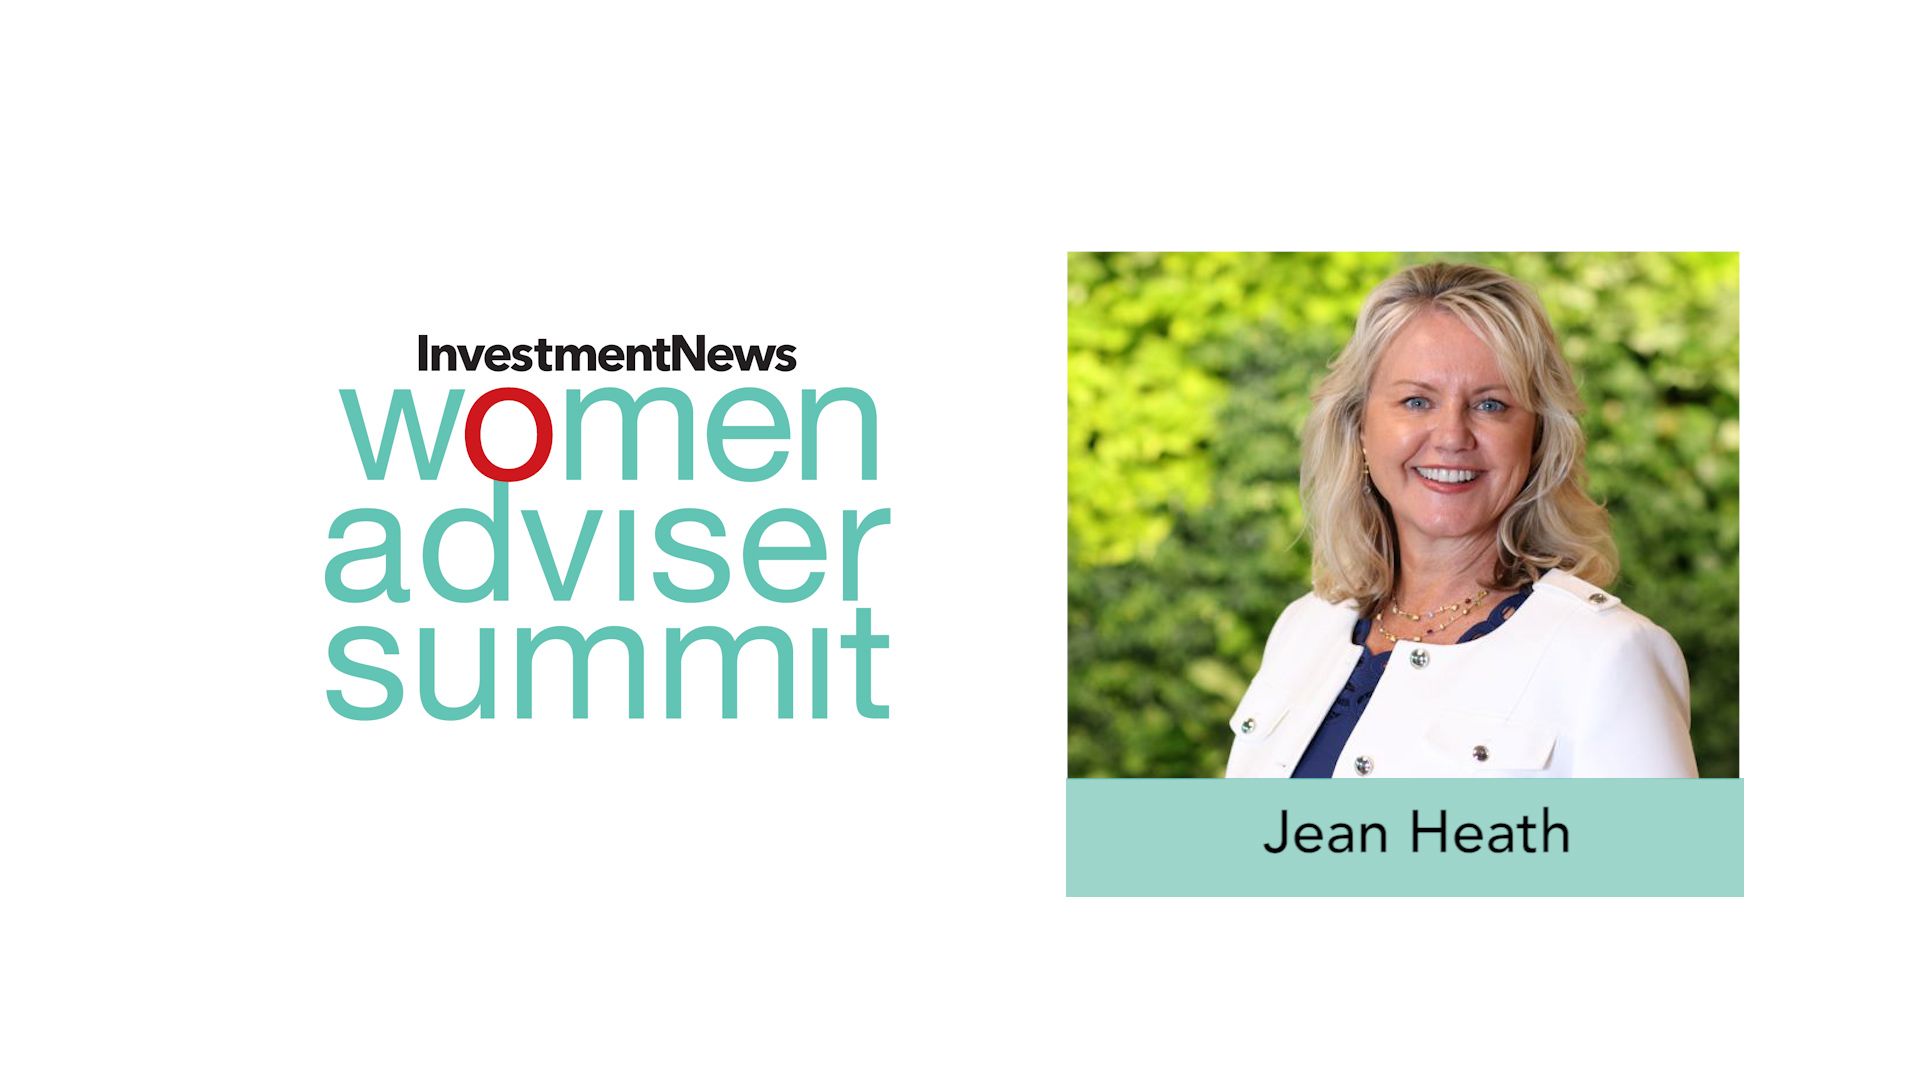 Tips on mentoring programs from Envestnet's Jean Heath